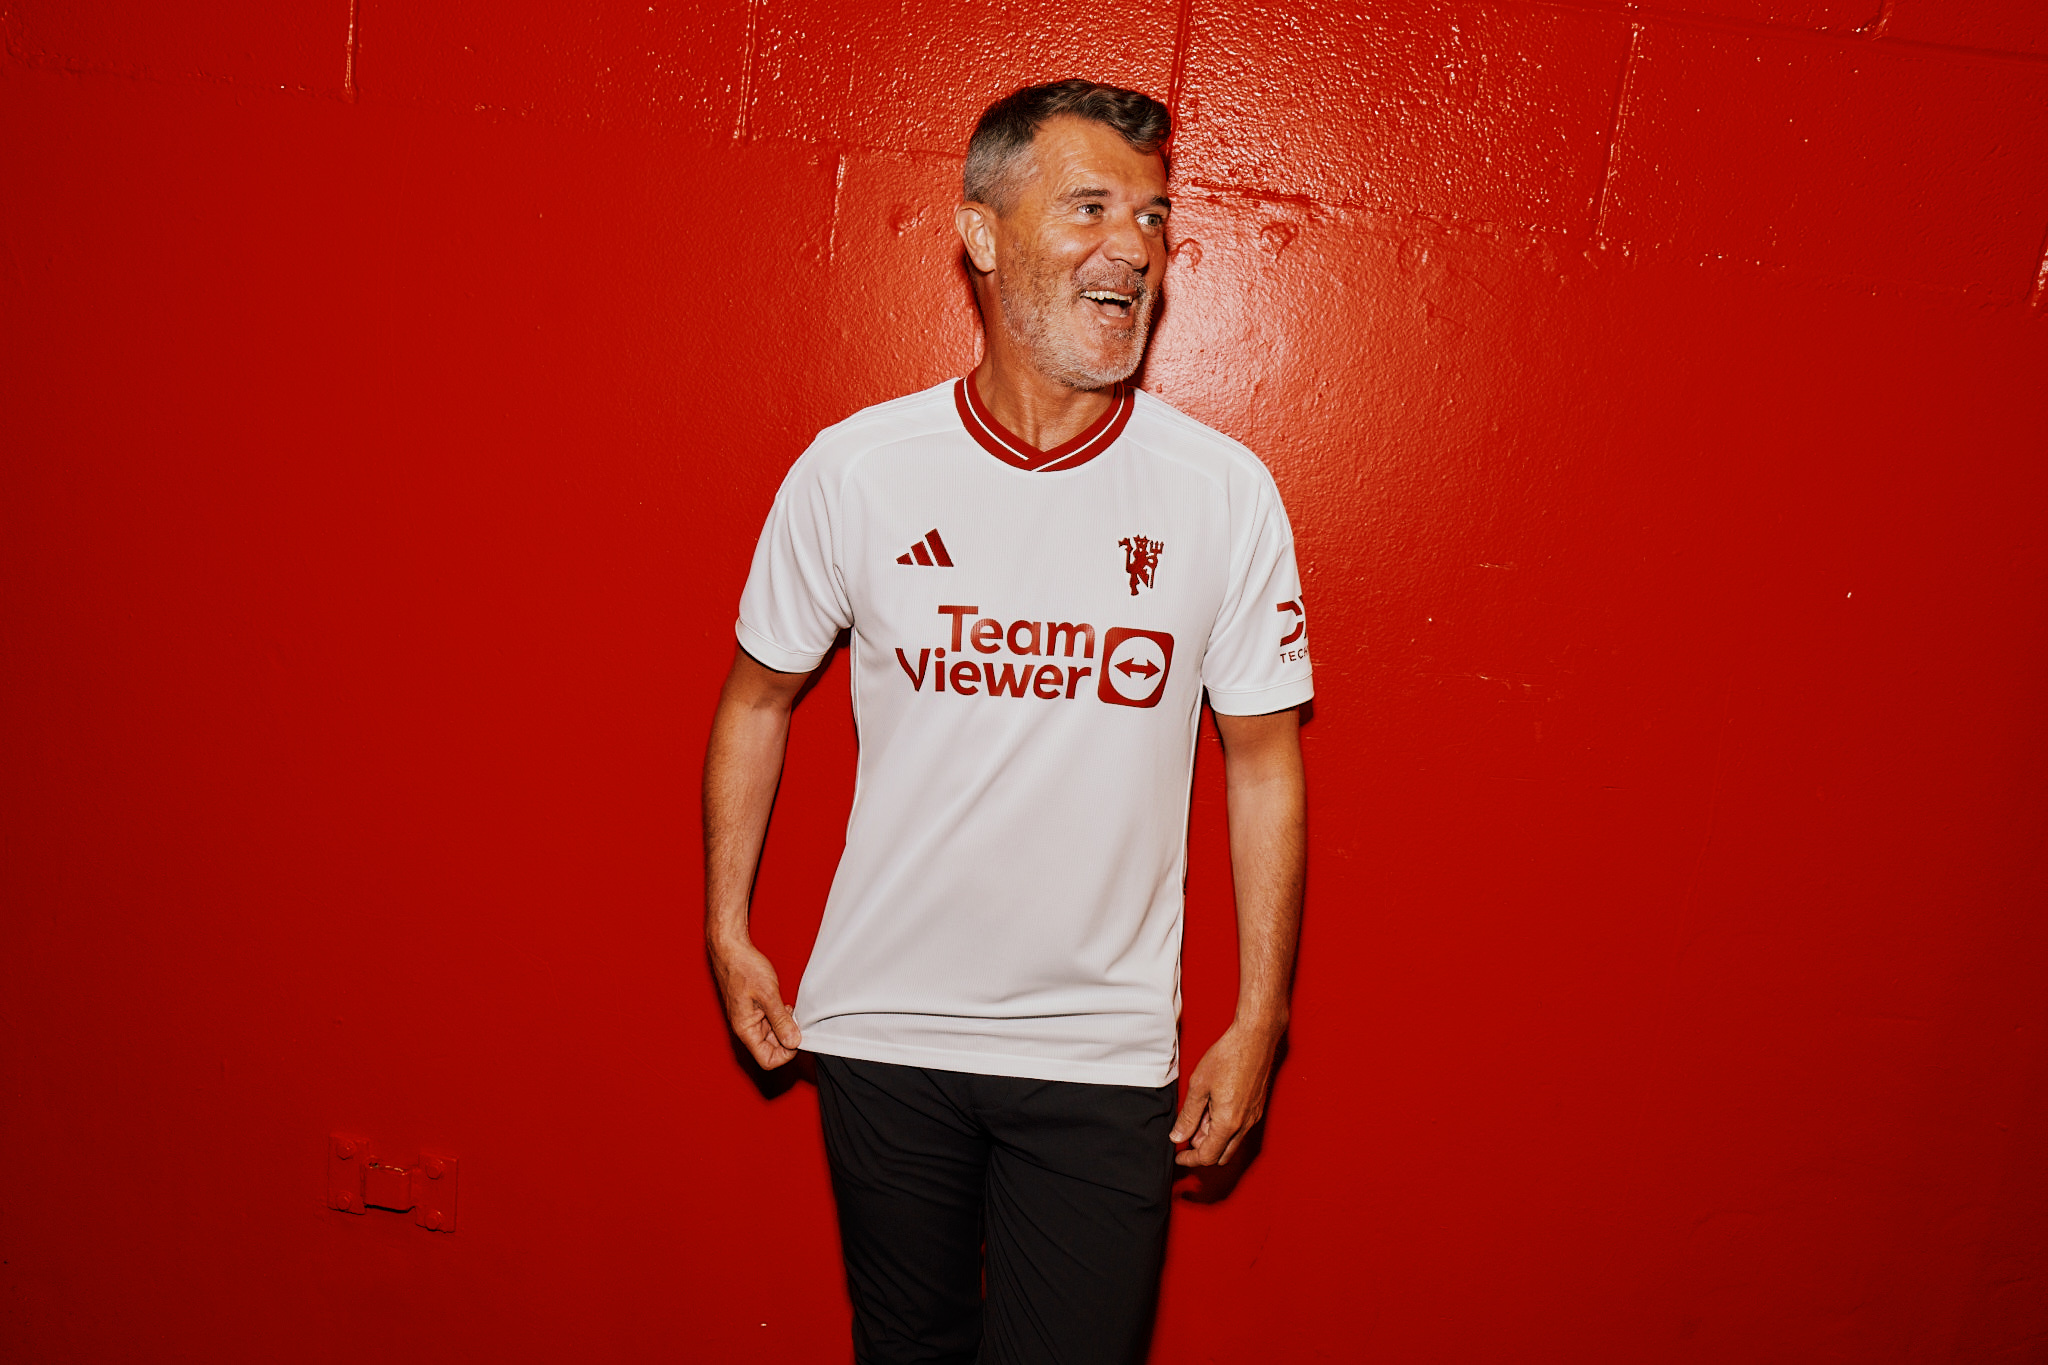 Roy Keane of Manchester United (Image Credit: Manchester United/ Adidas)